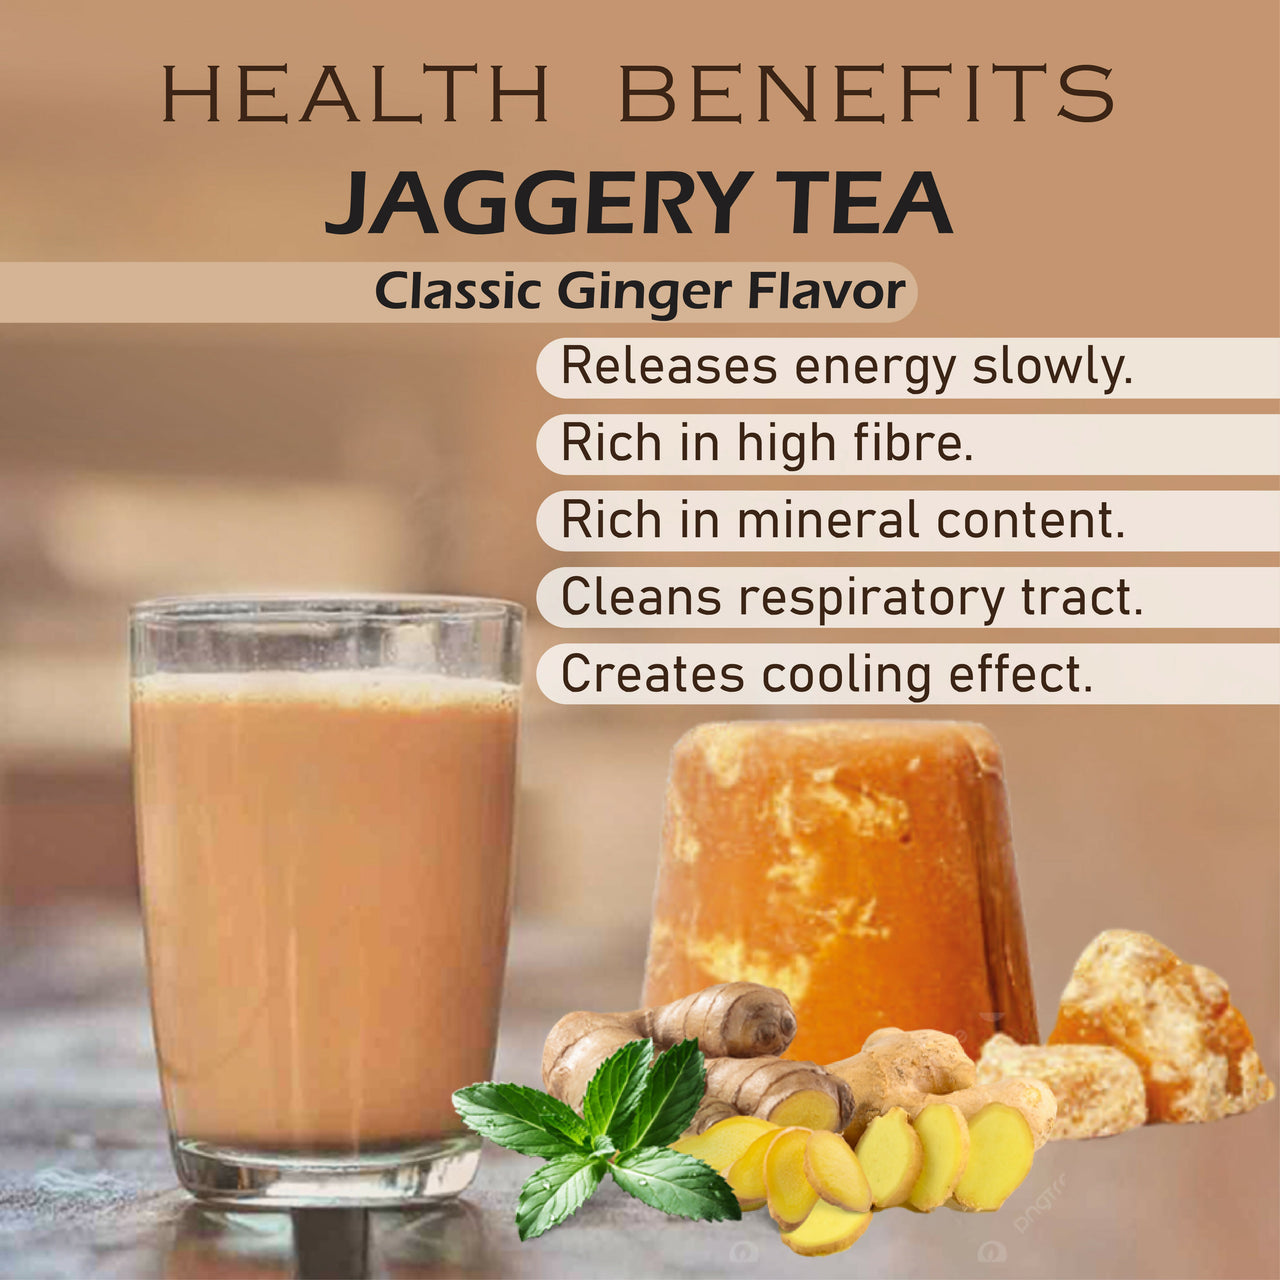 Tea Jaggery 1000x1000 px-07